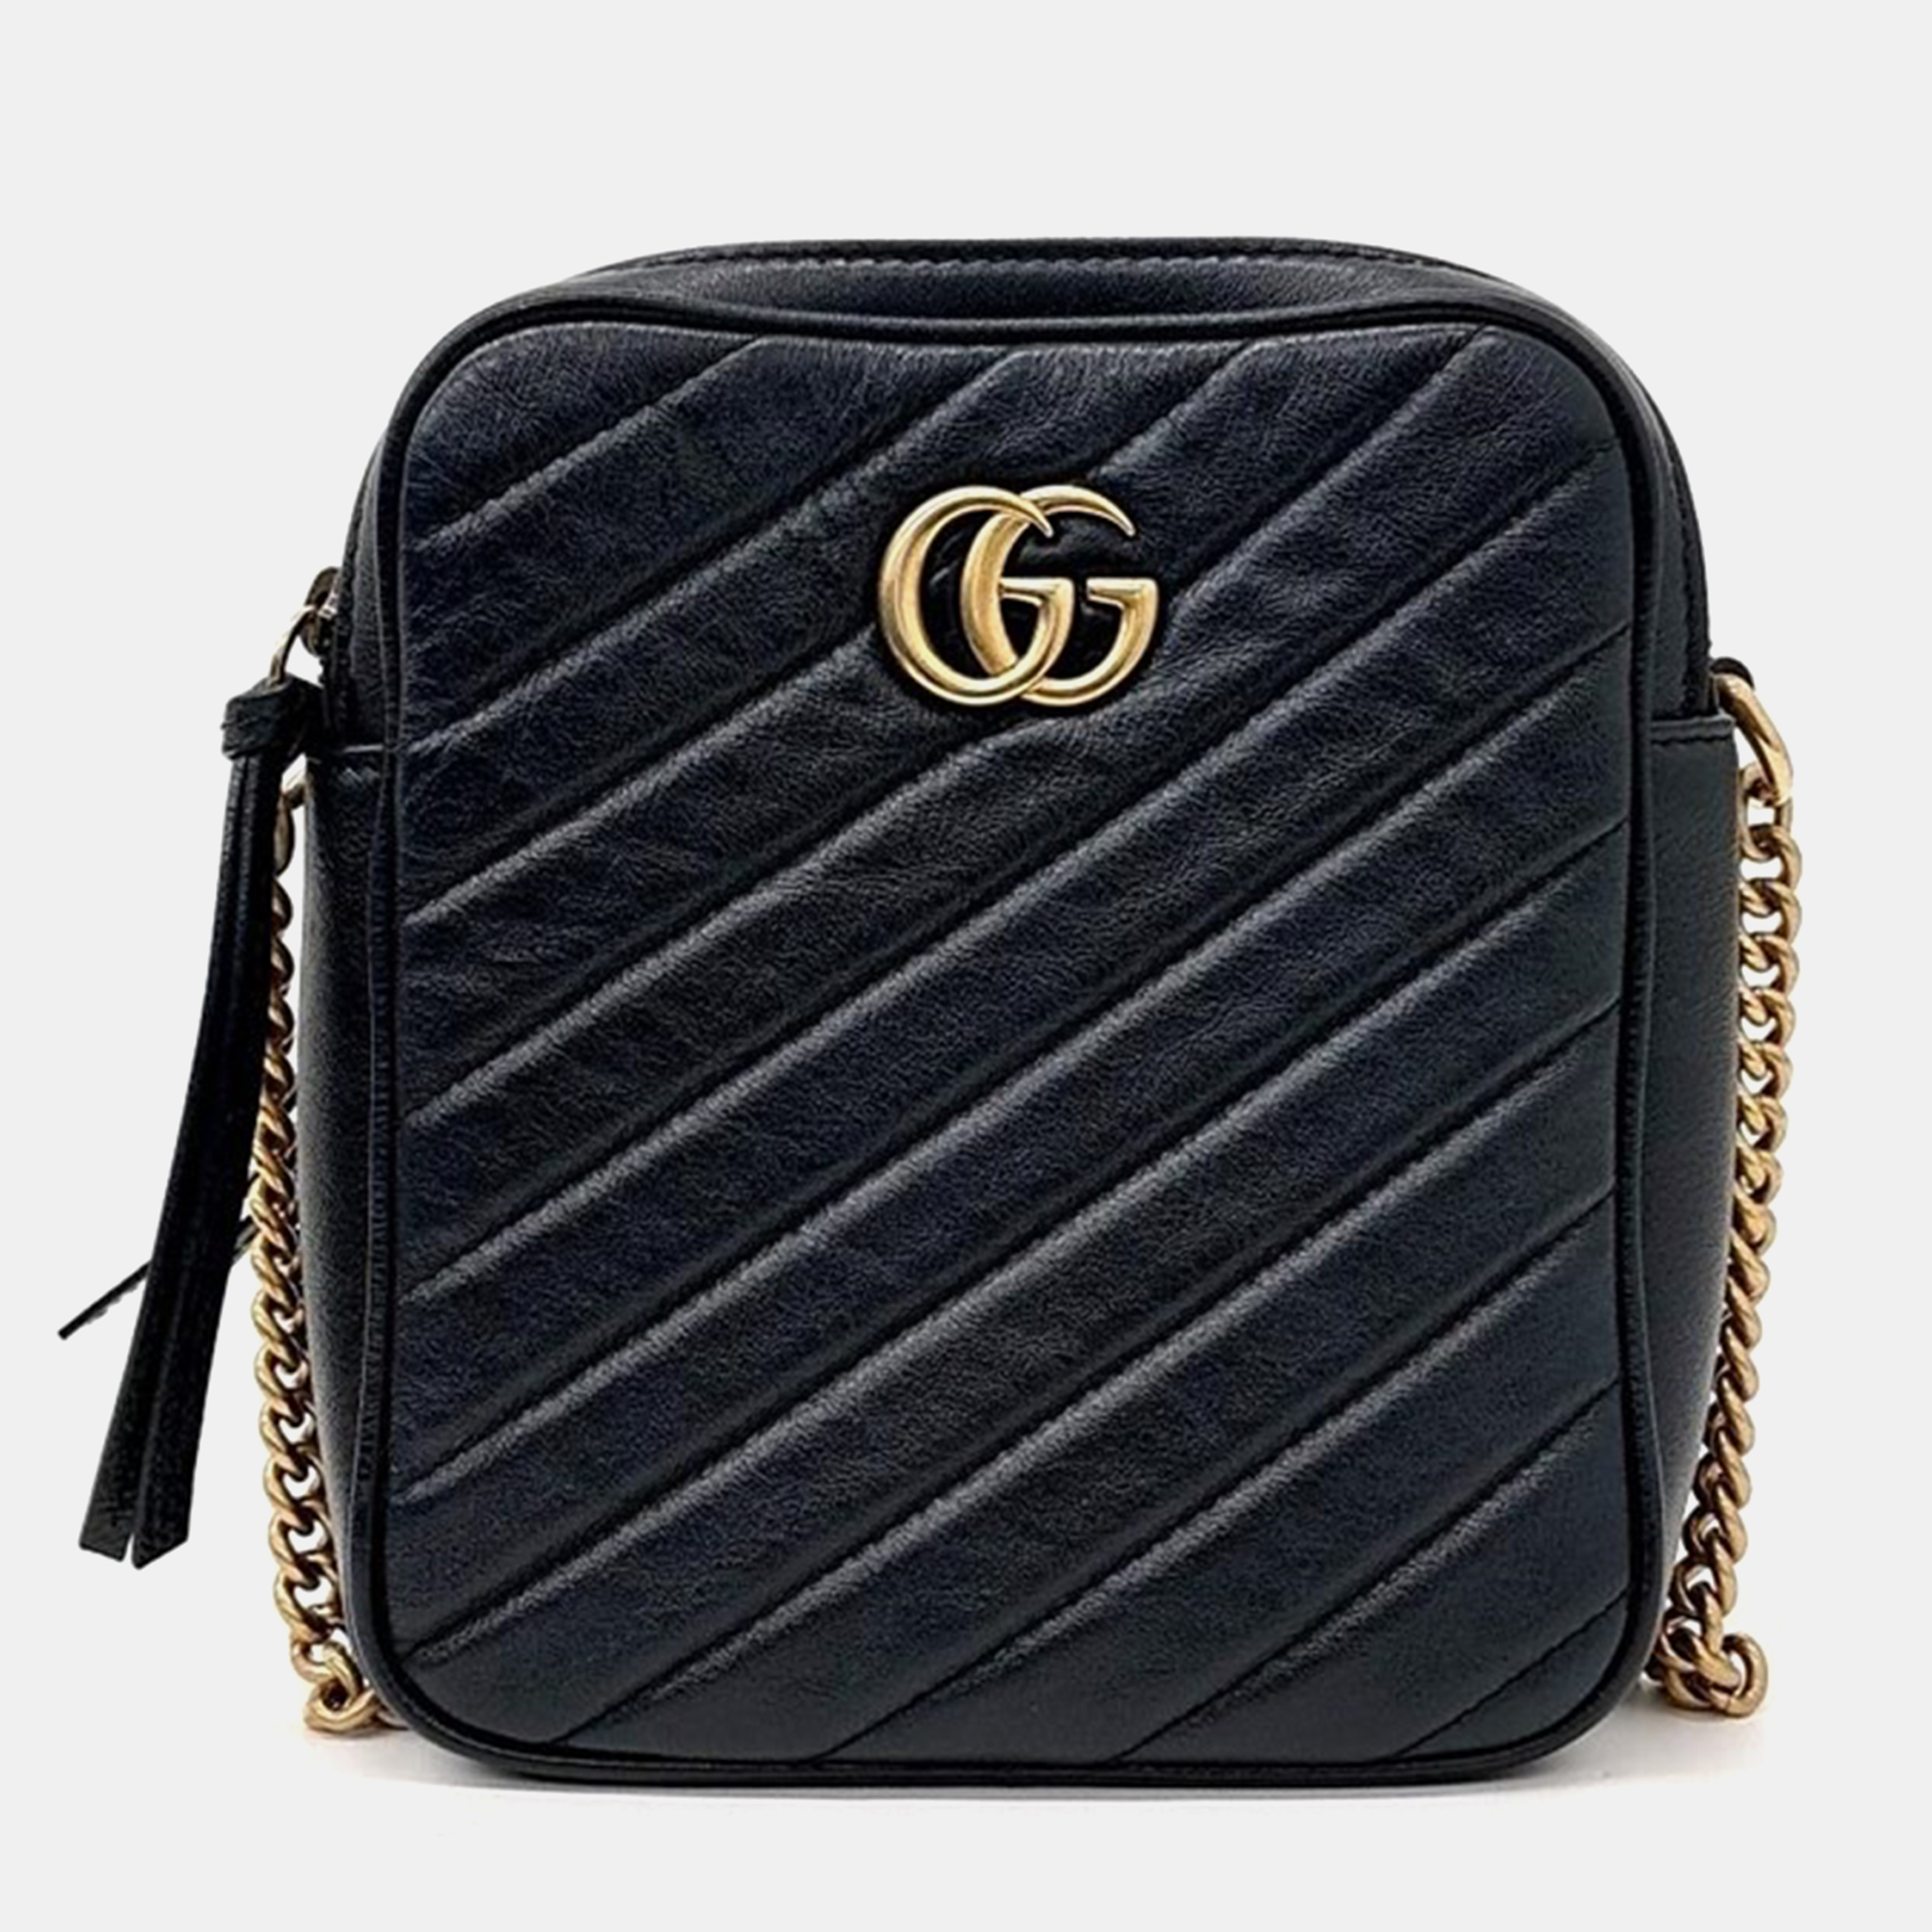 

Gucci Marmont Chain Cross Bag, Black